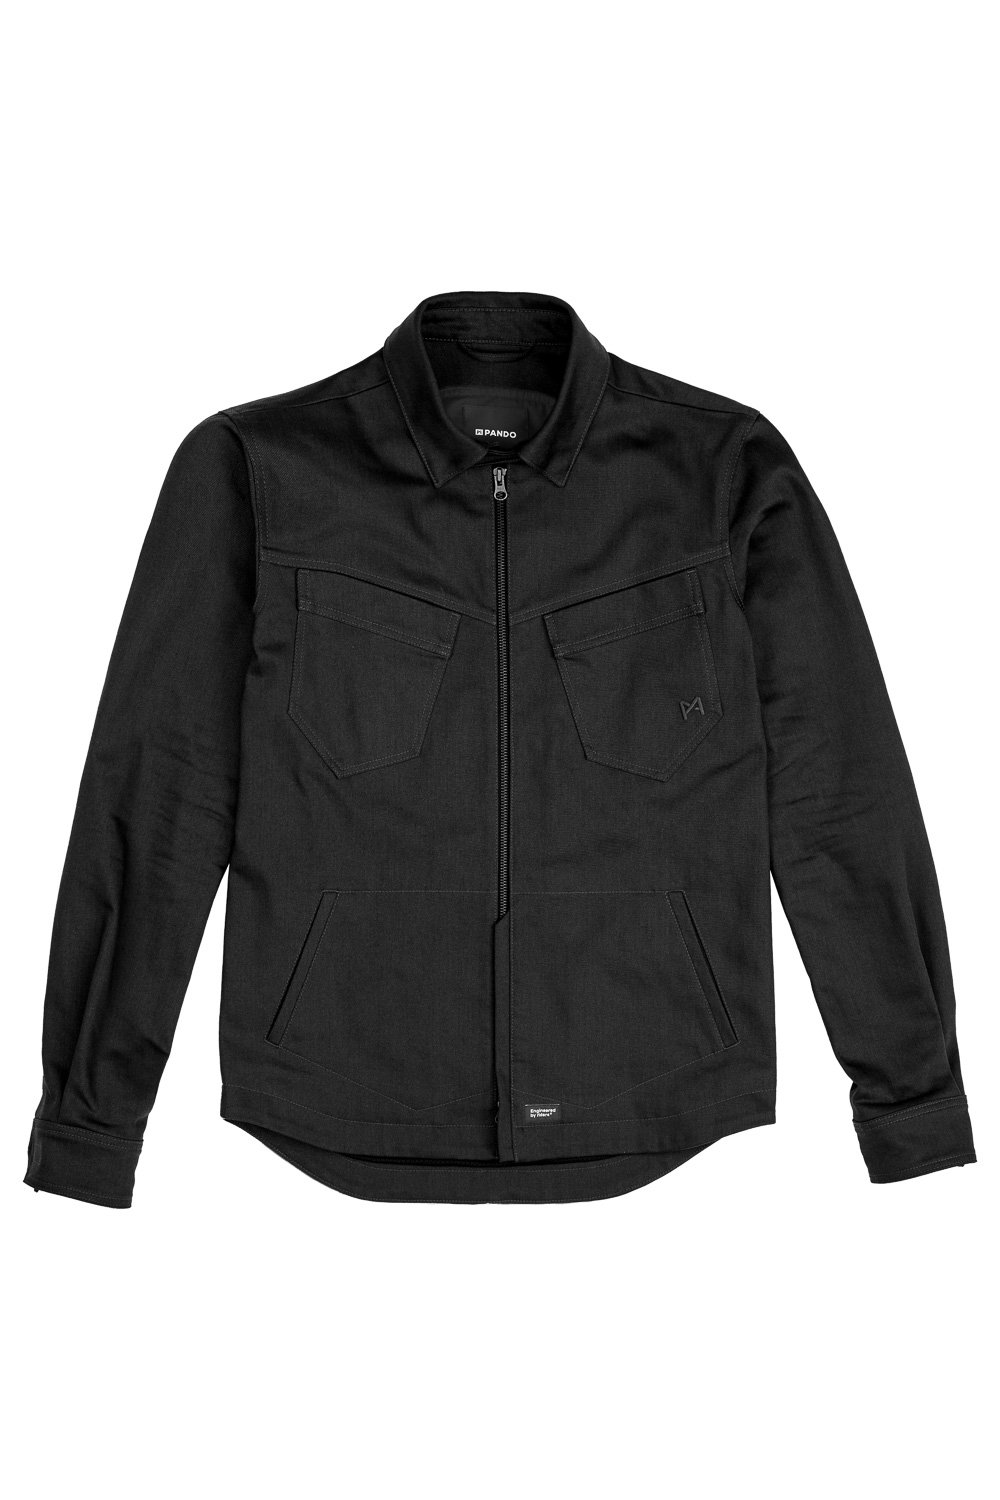 Image of Pando Moto Capo Cor 03 Shirt - Unisex Slim-Fit Cordura Jacke Größe 2XL